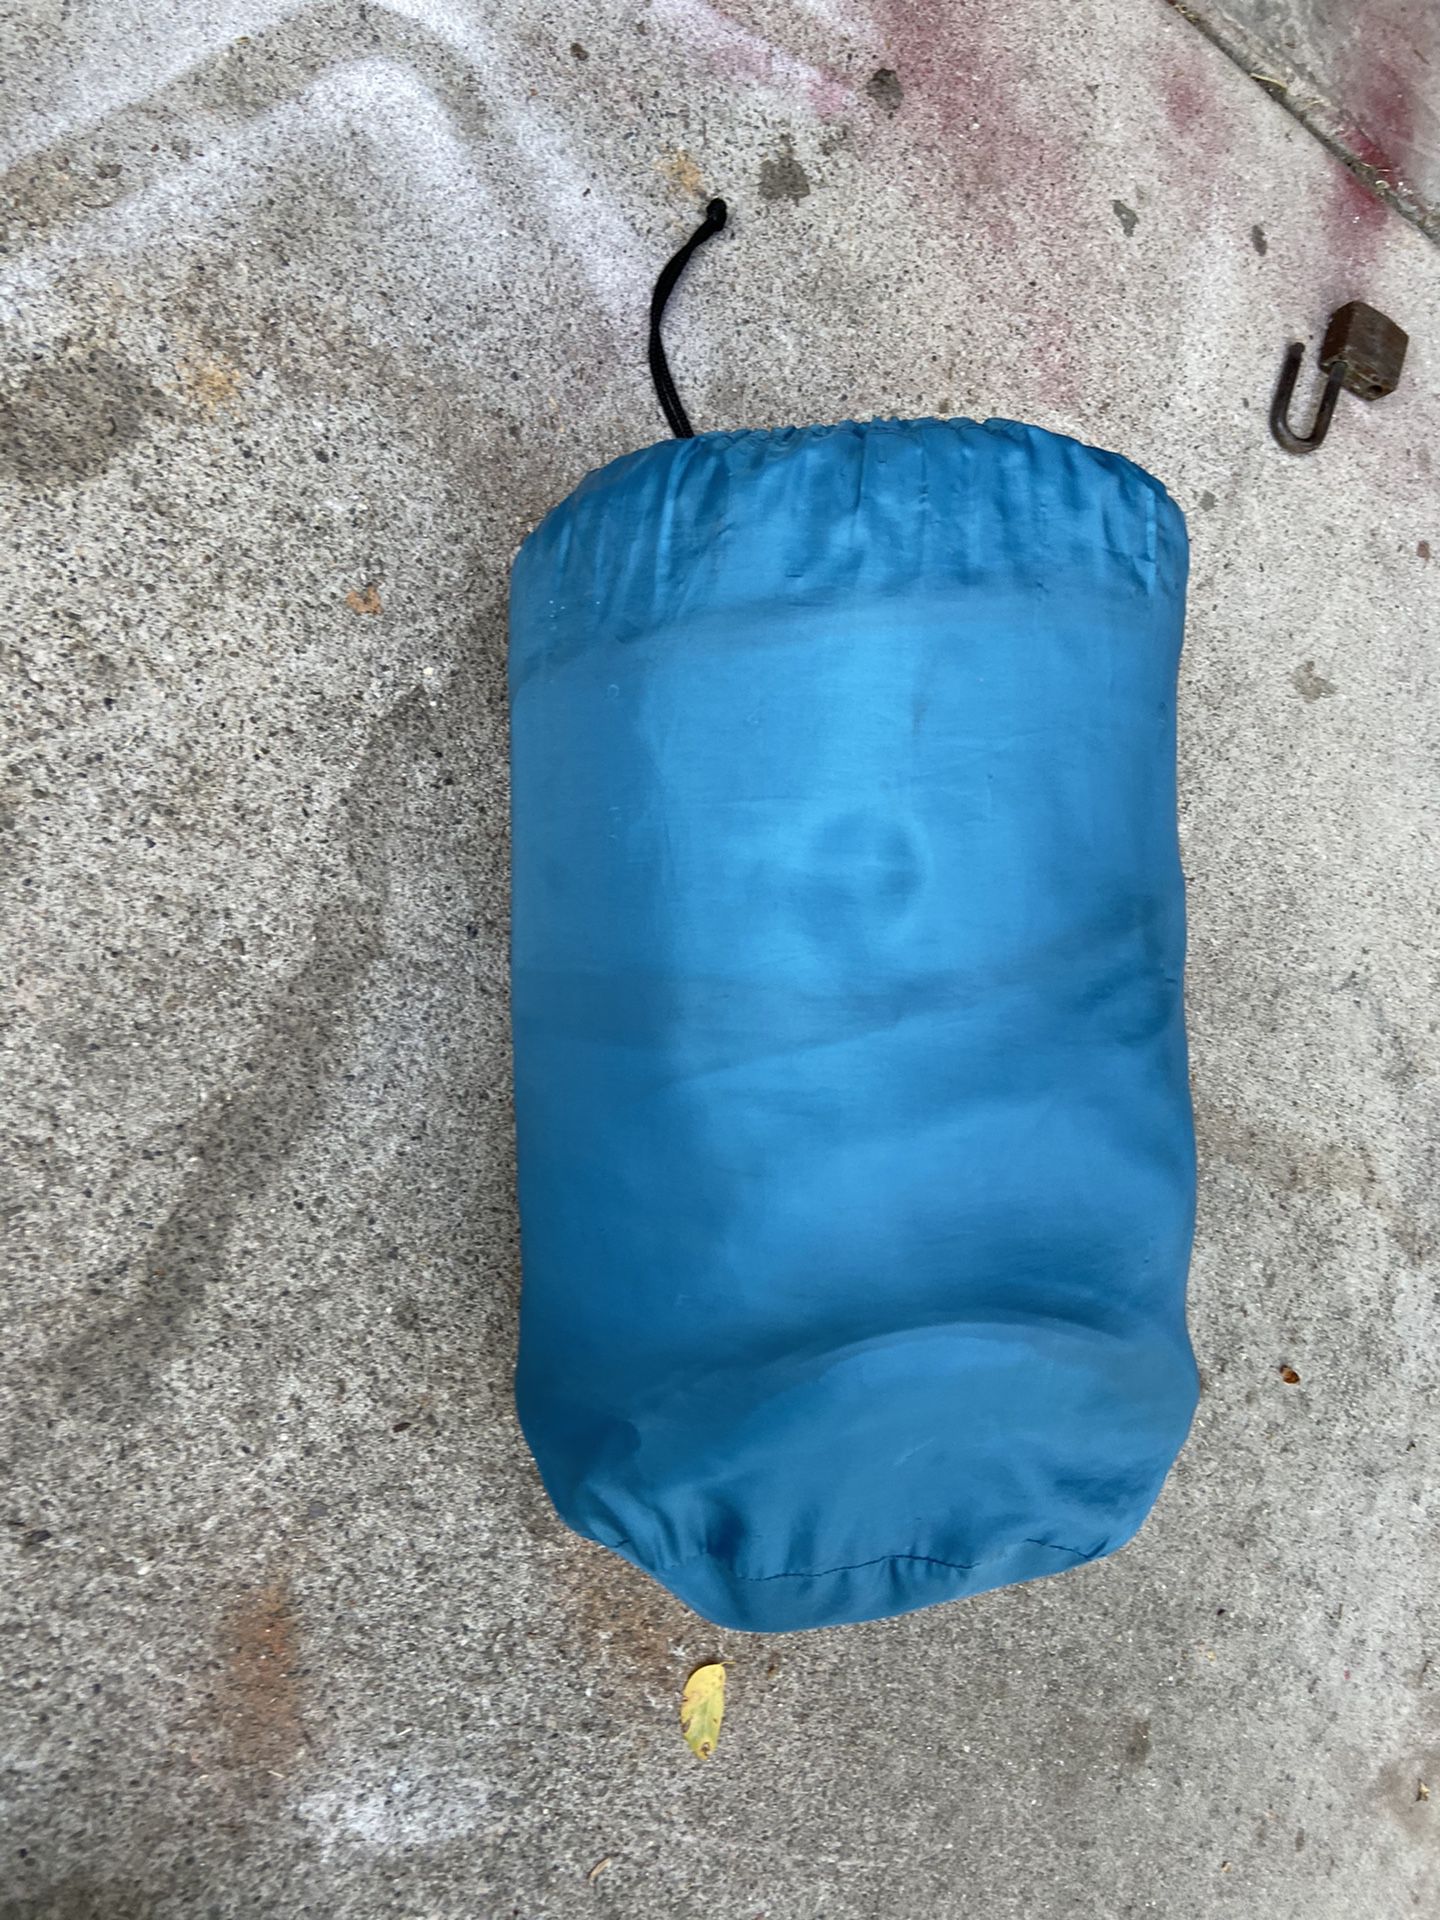 Child size sleeping bag 5 feet